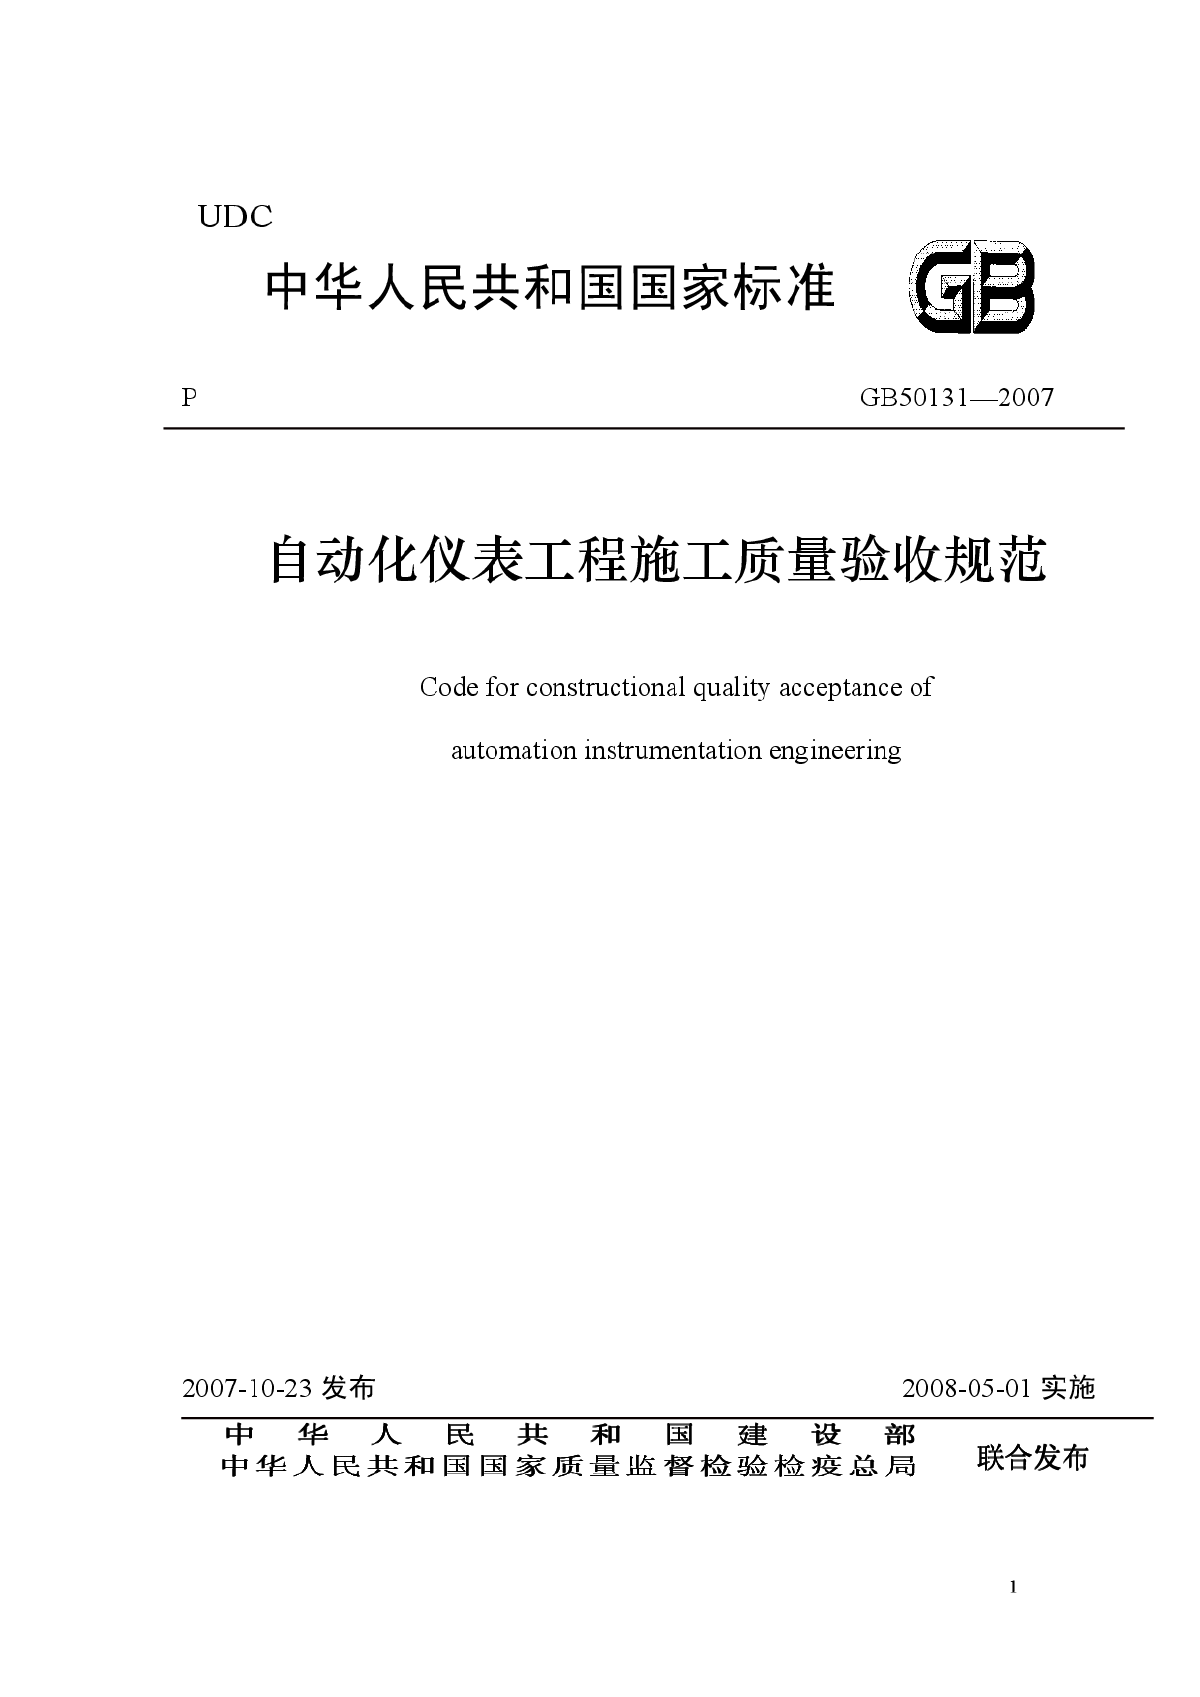 GB 50131-2007 自动化仪表工程施工质量验收规范.pdf